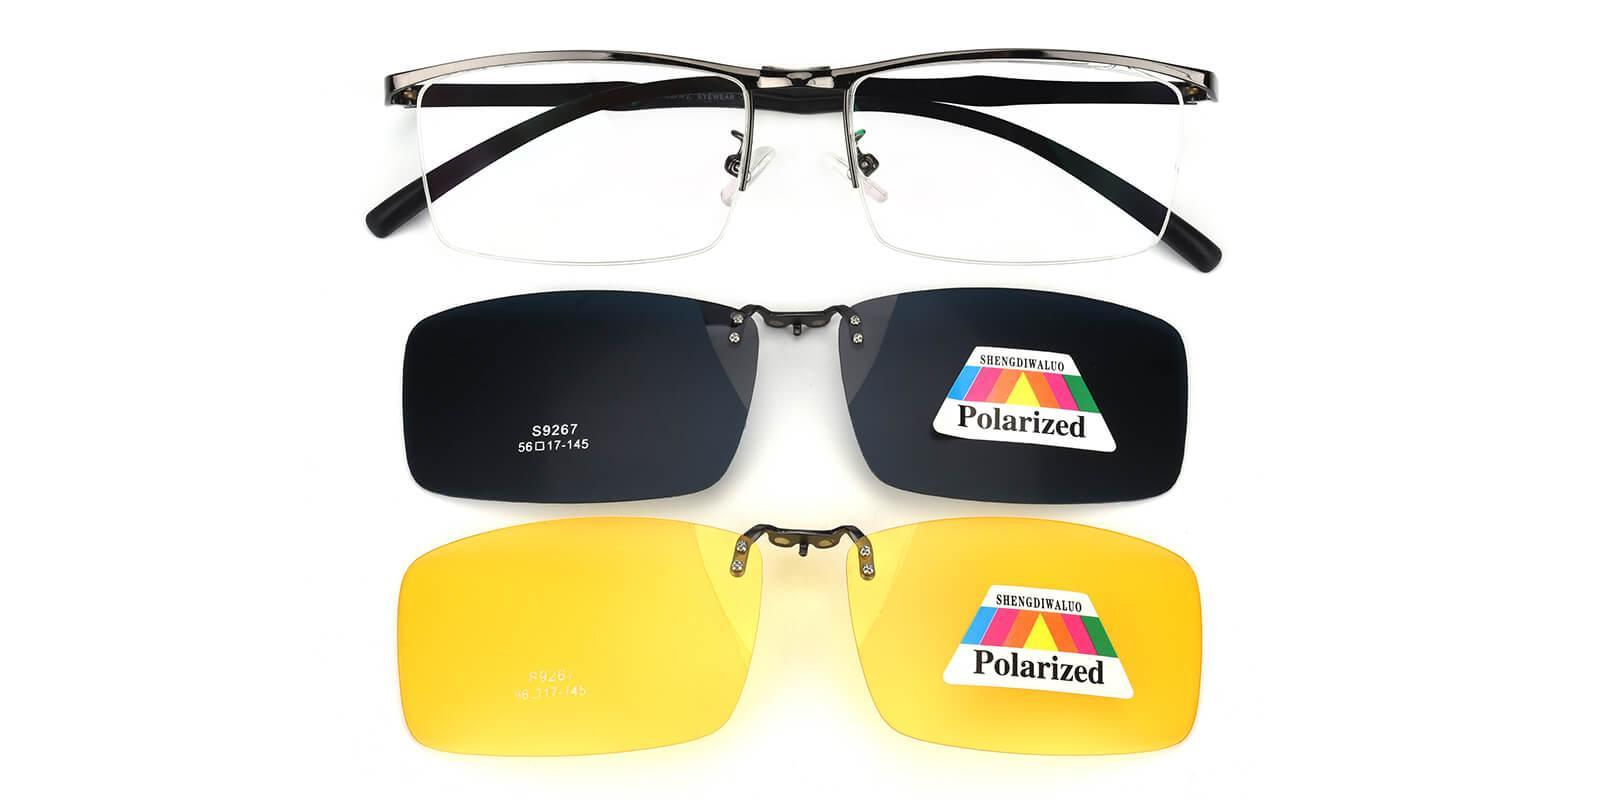 Sphinx Gun Metal Eyeglasses , NosePads , SpringHinges Frames from ABBE Glasses